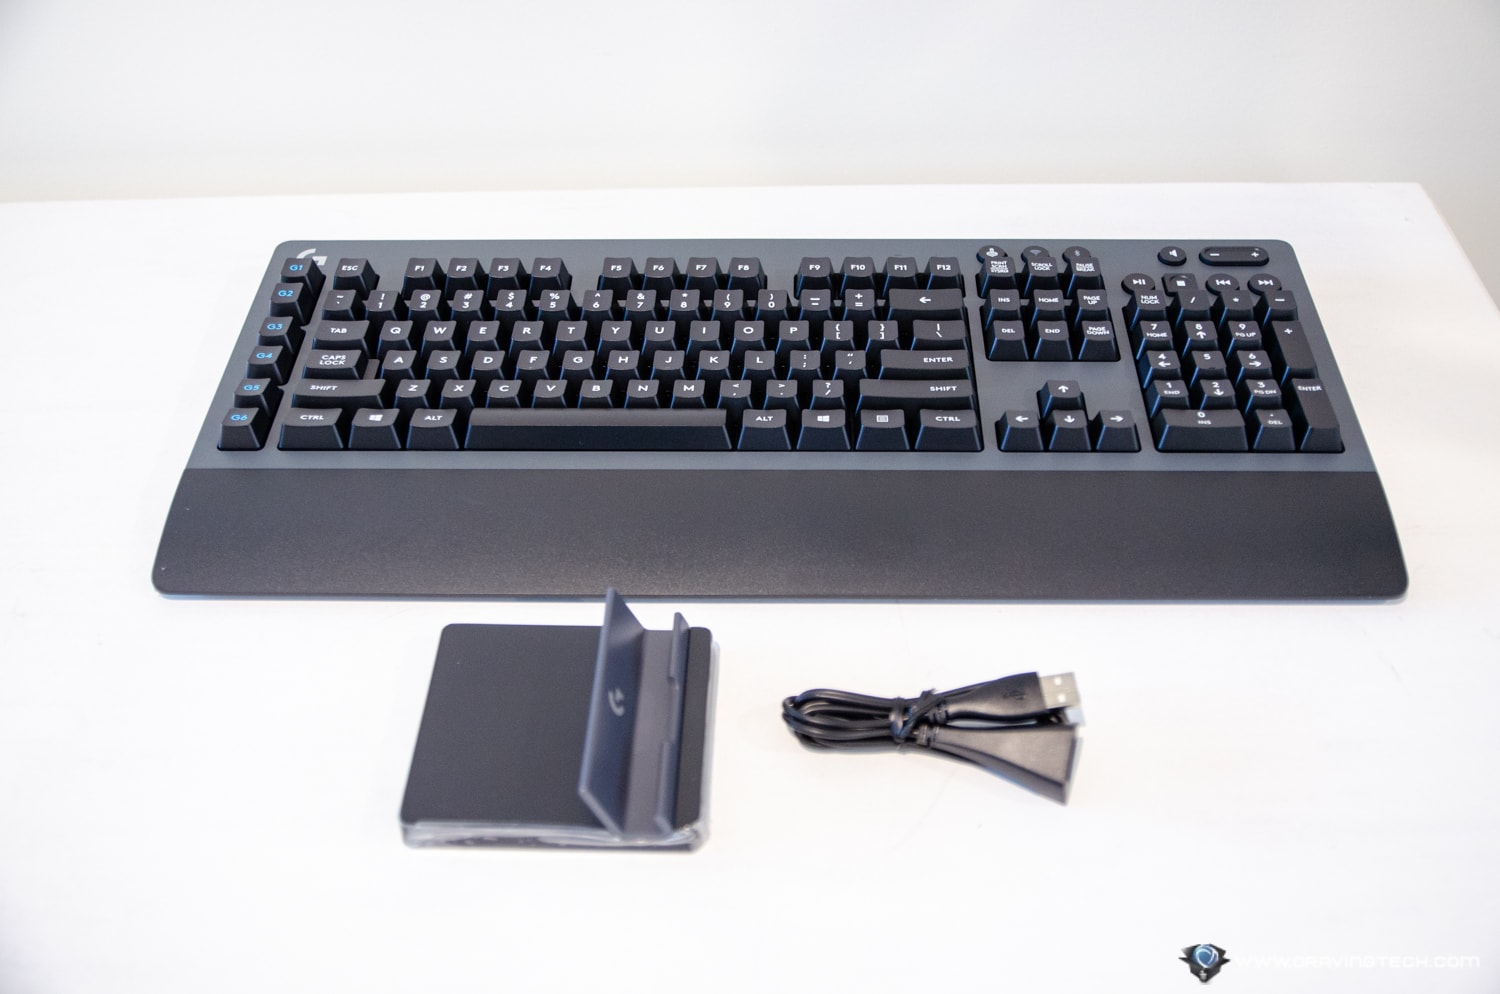 Logitech G613 Wireless Mechanical Gaming Keyboard Review - Packaging